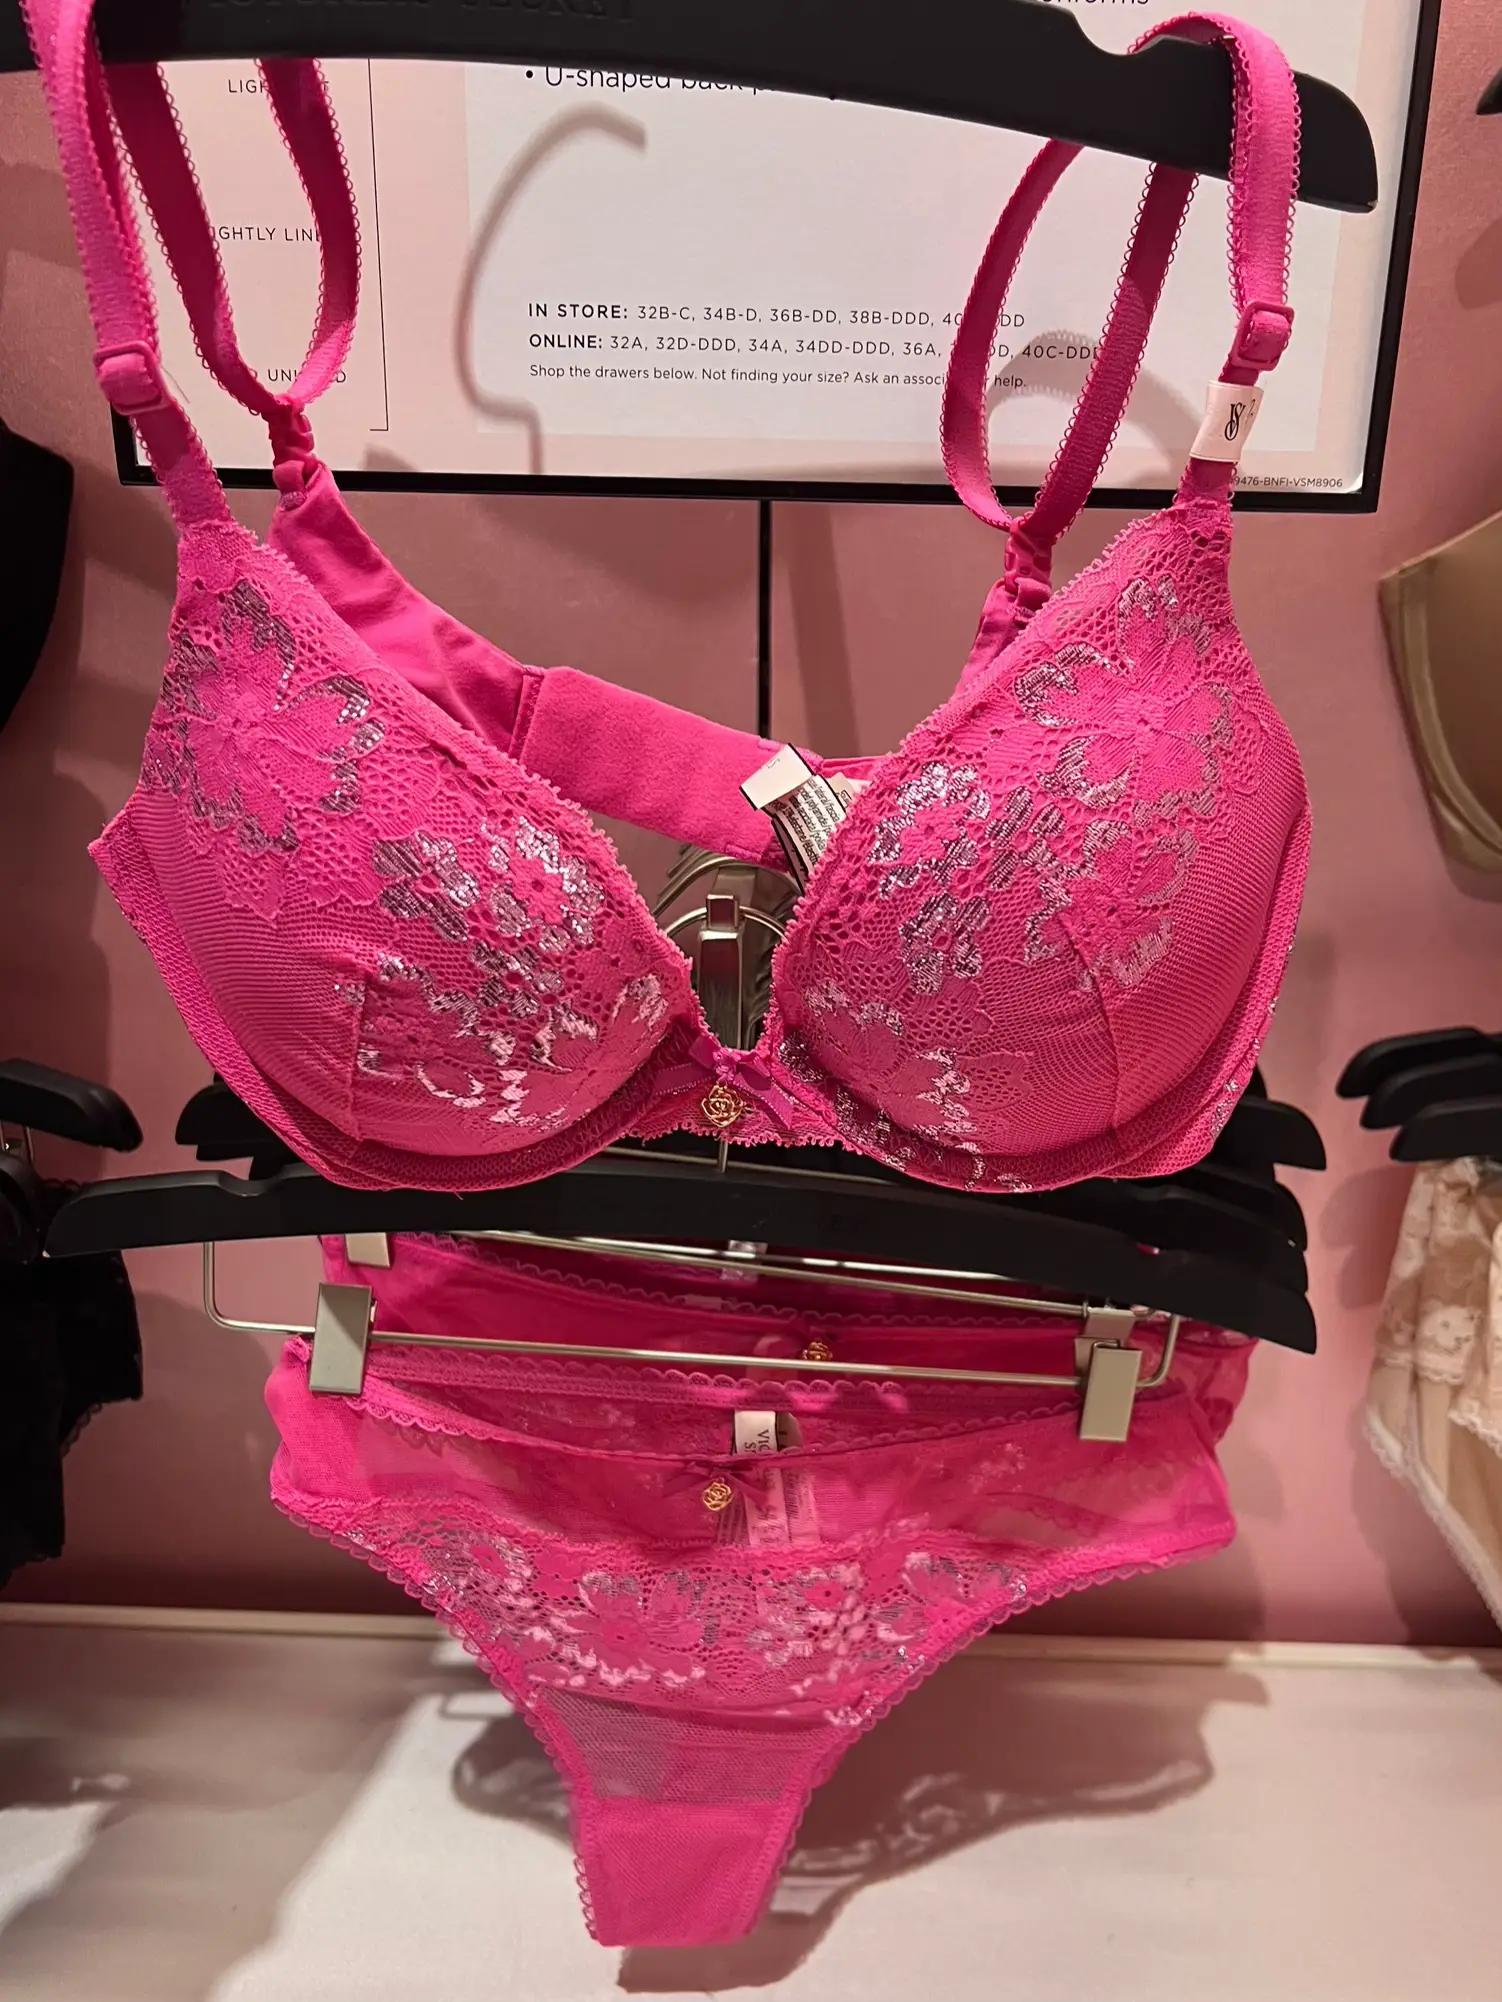 PINK - Victoria's Secret Victoria Secret Pink Lacey Bra sz 32B Blue - $20 -  From Vogue